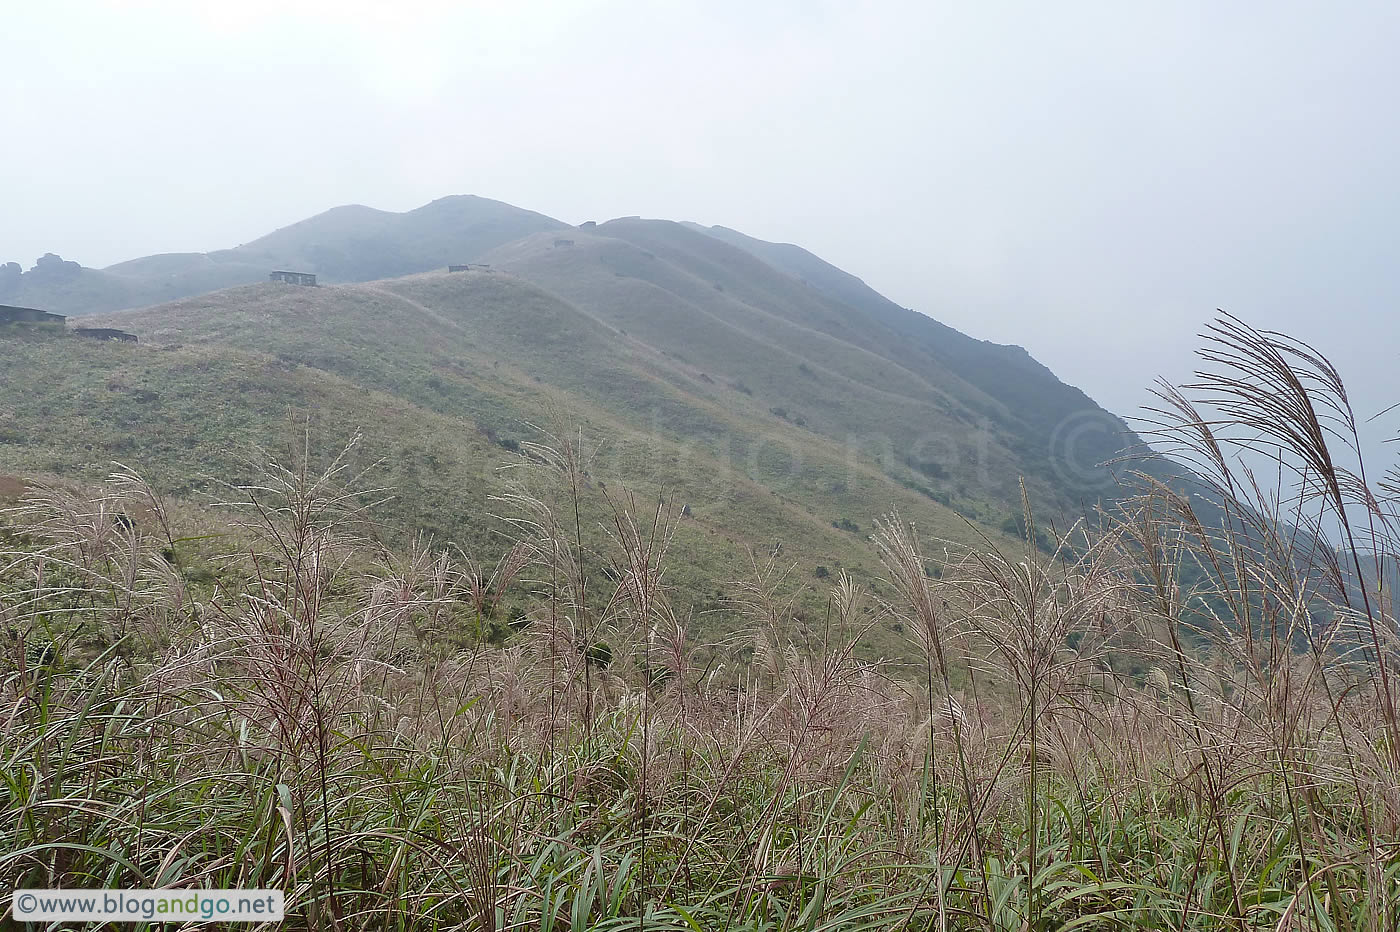 Lantau Trail - Walking the top